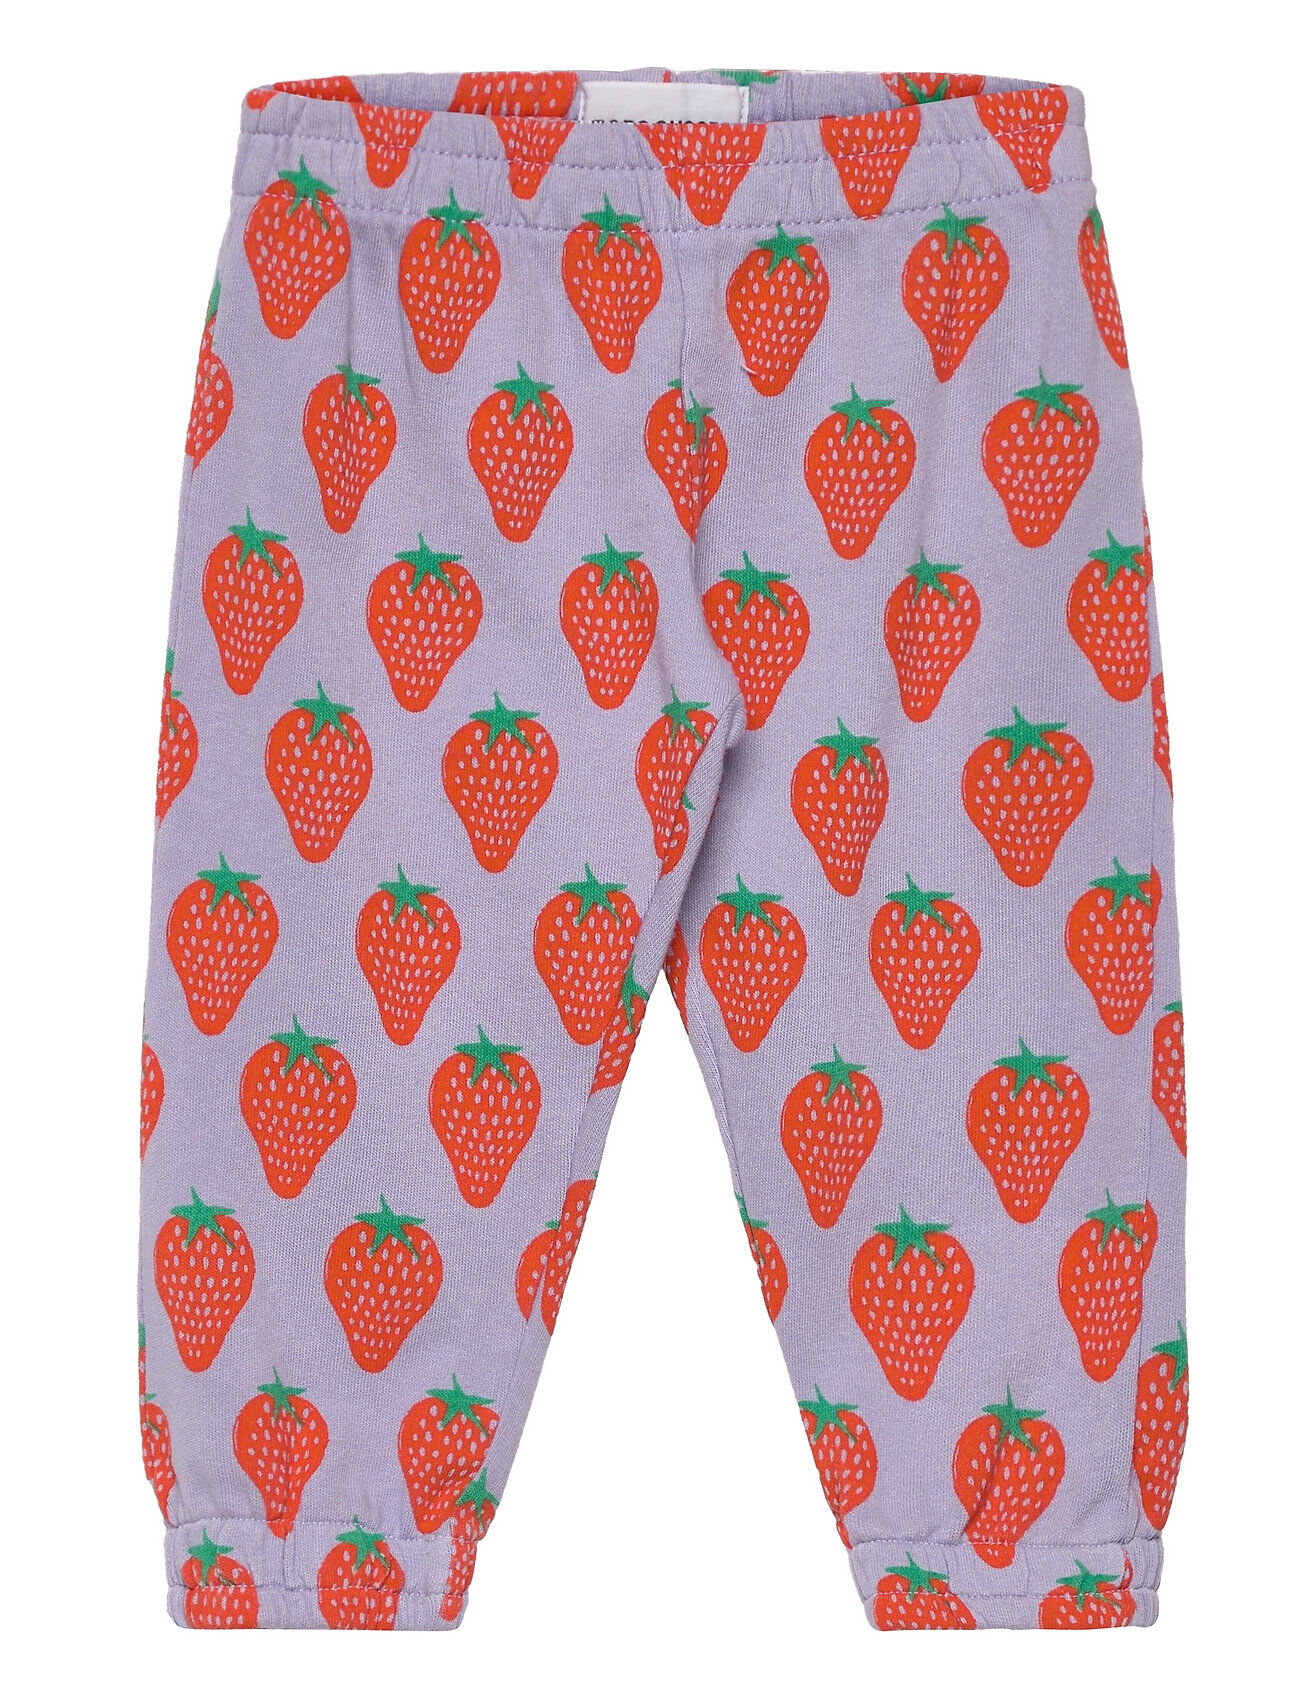 Bobo Choses Strawberry All Over Jogging Pants Joggebukser Pysjbukser Multi/mønstret Bobo Choses